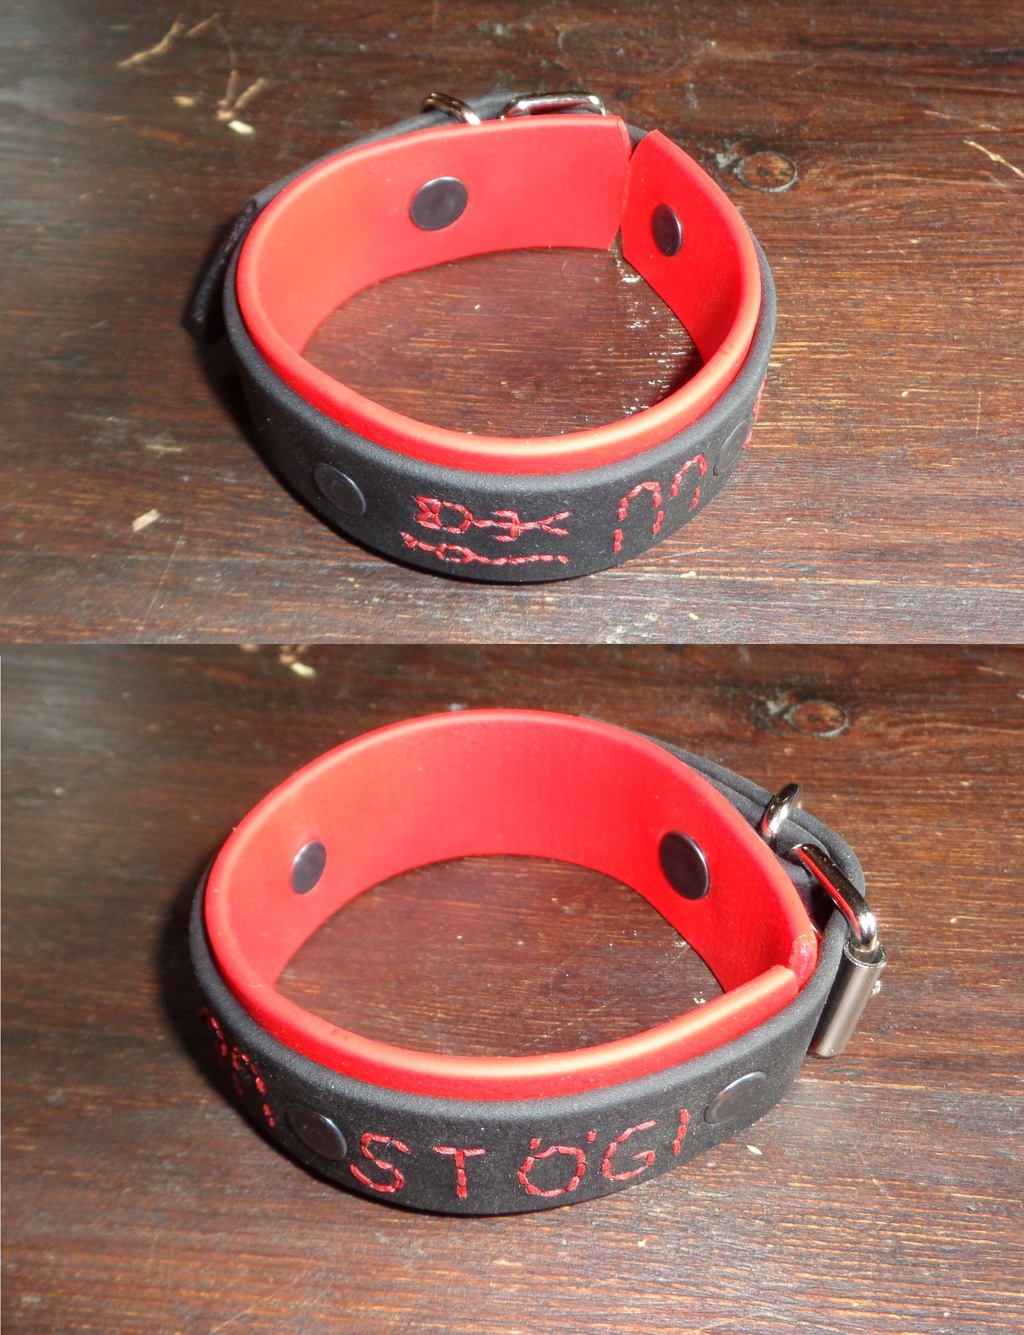  EF23 - Bracelet Nr. 15 for Stögi